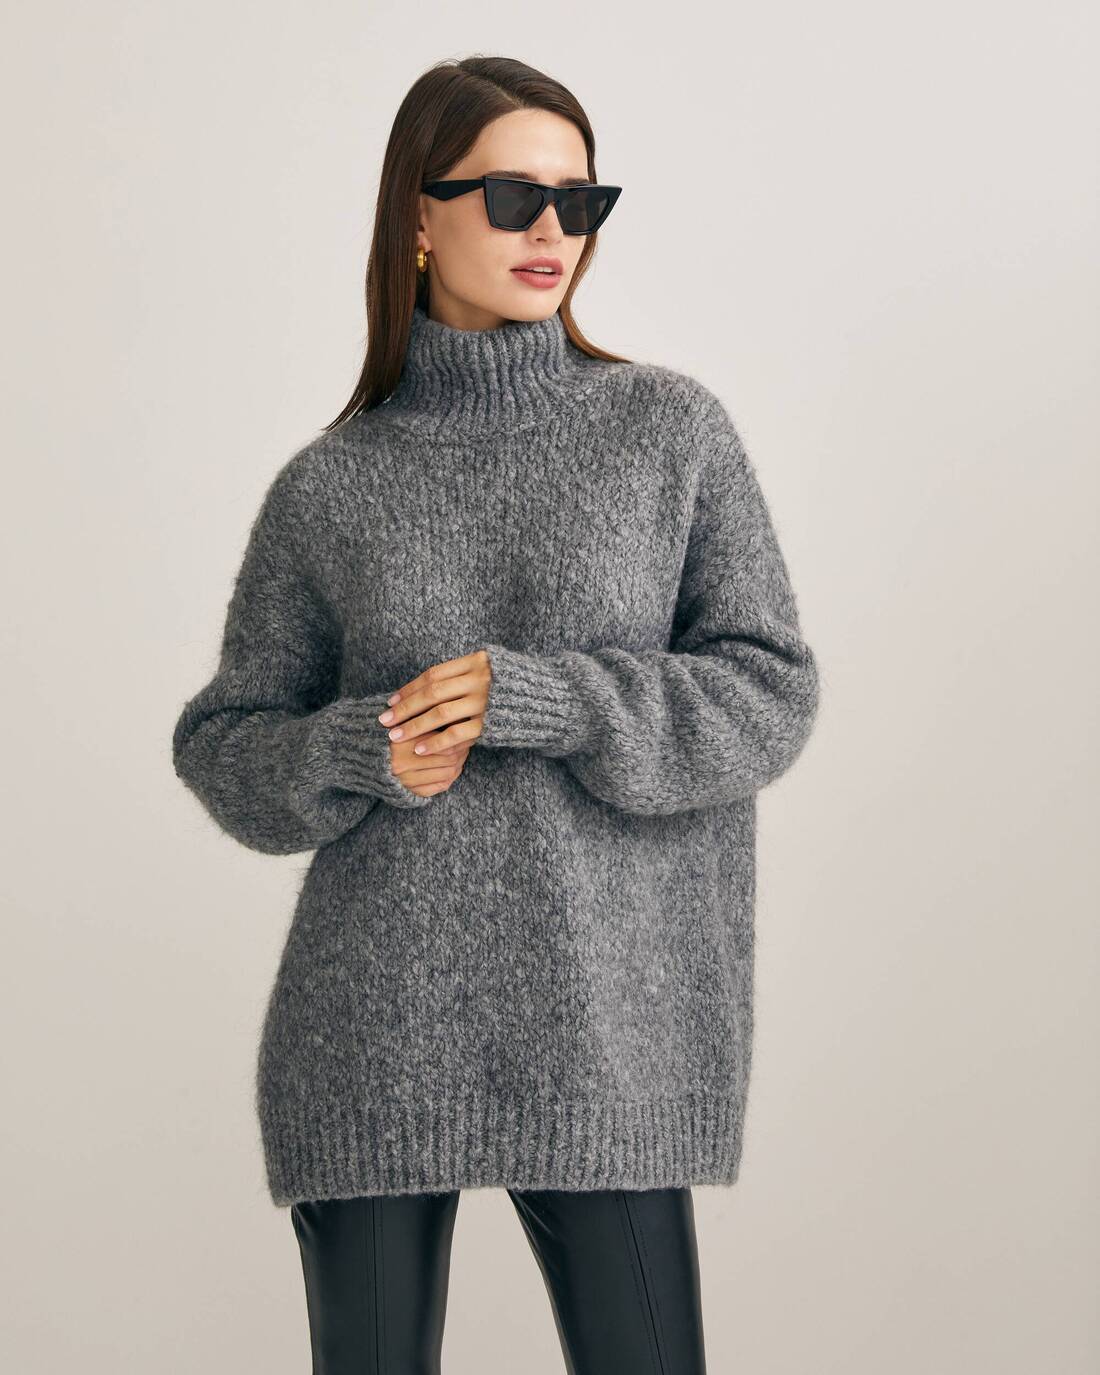 Elongated mohair sweater